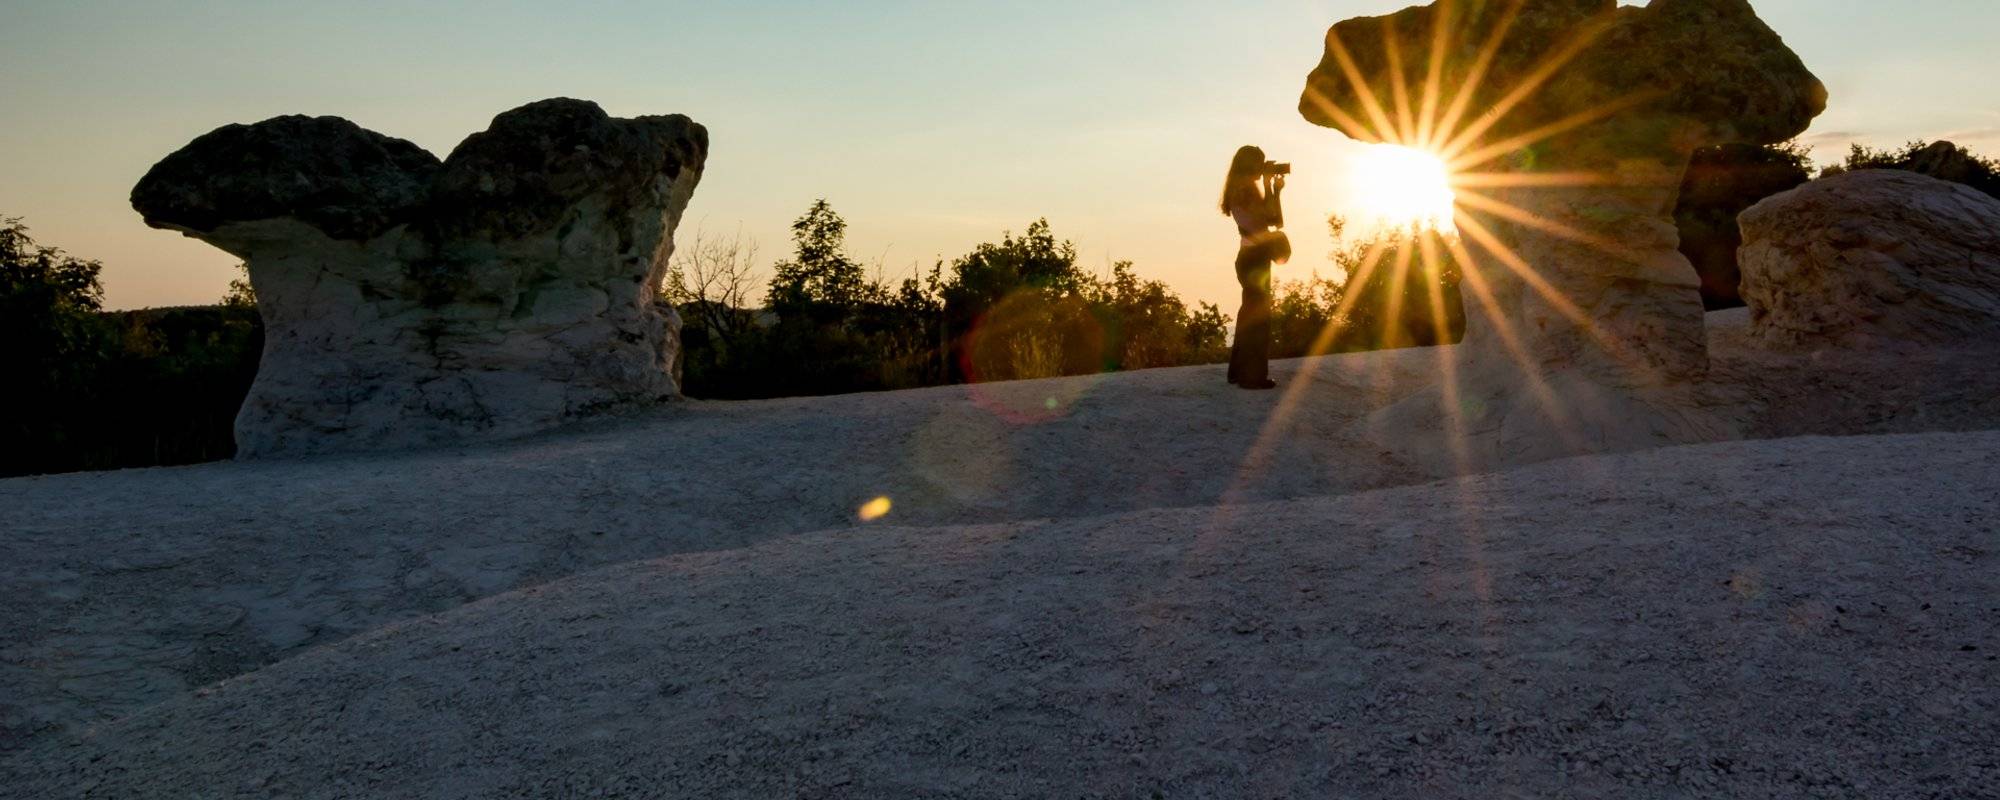 Travel Photo Story: One sunset under the magical Stone Mushrooms